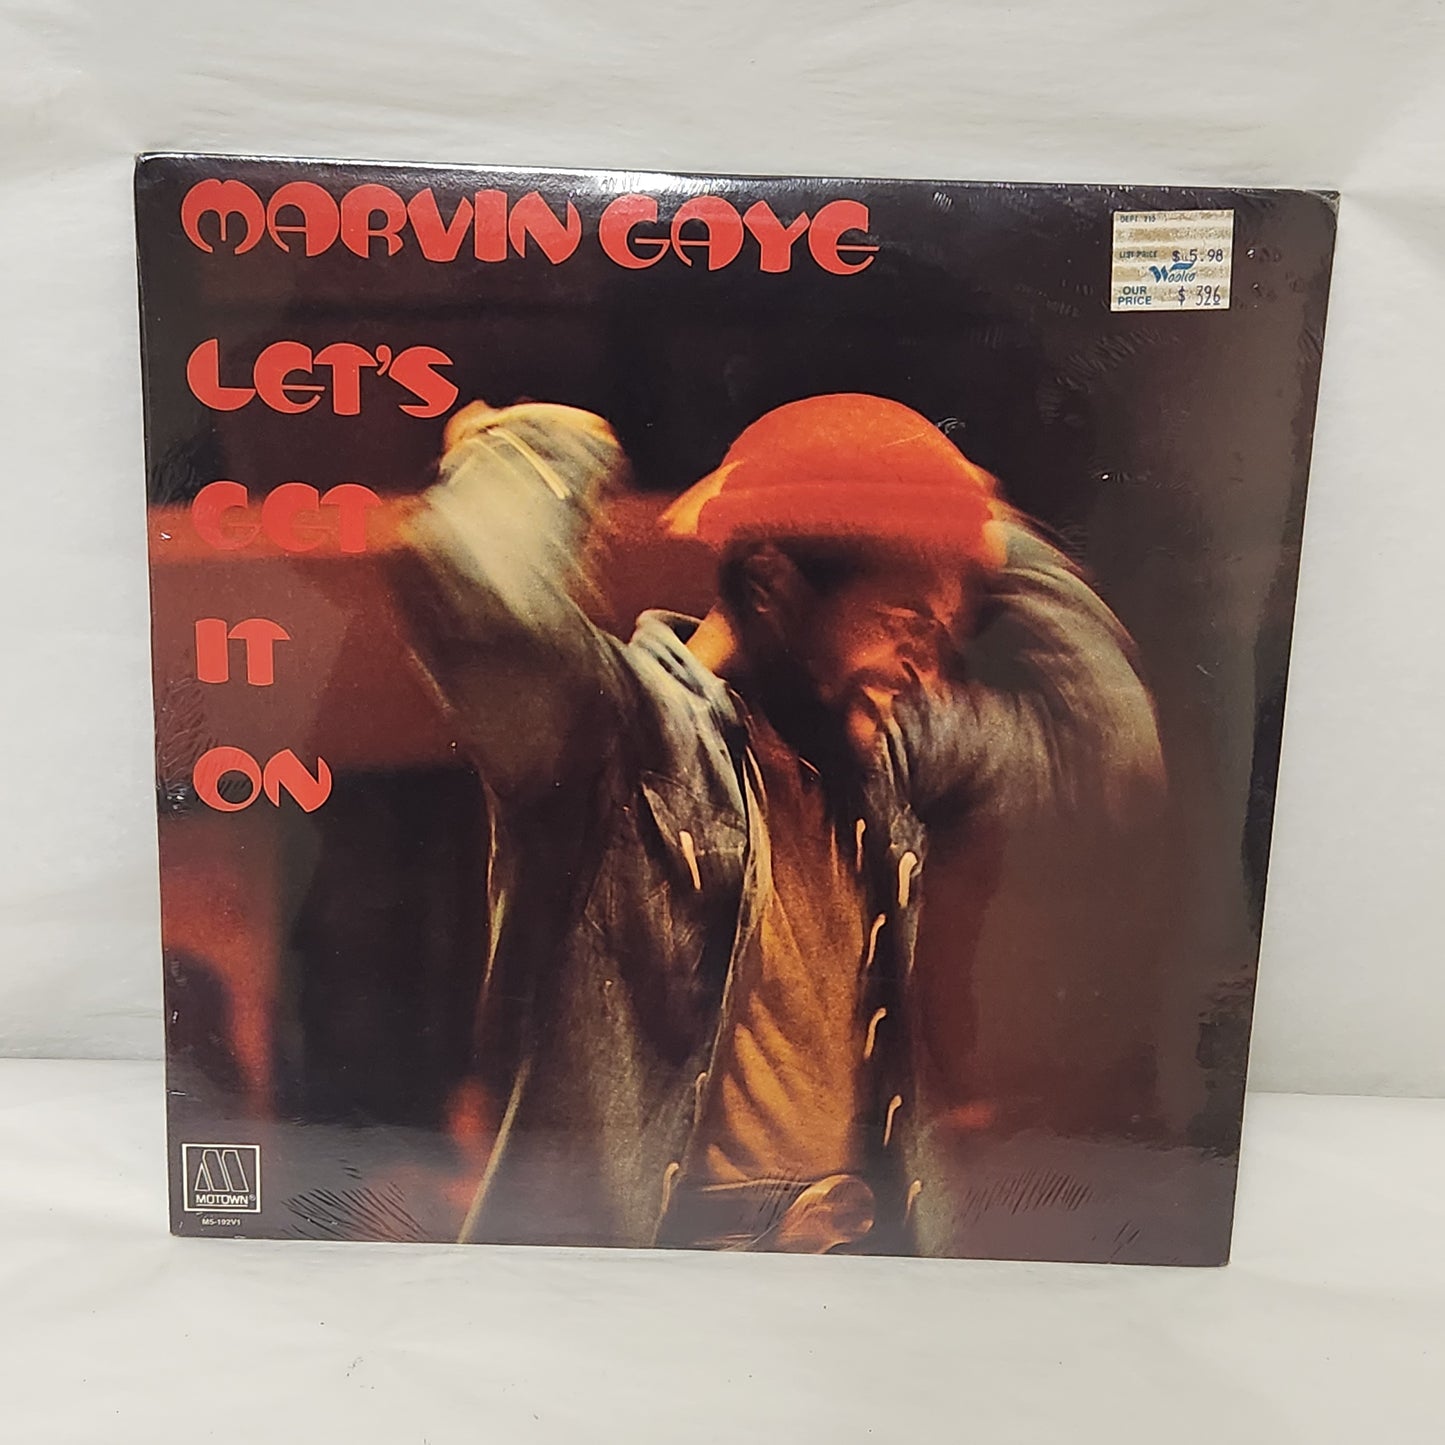 SEALED Marvin Gaye "Let's Get It On" 1981 Motown Reissue Funk & Soul Album